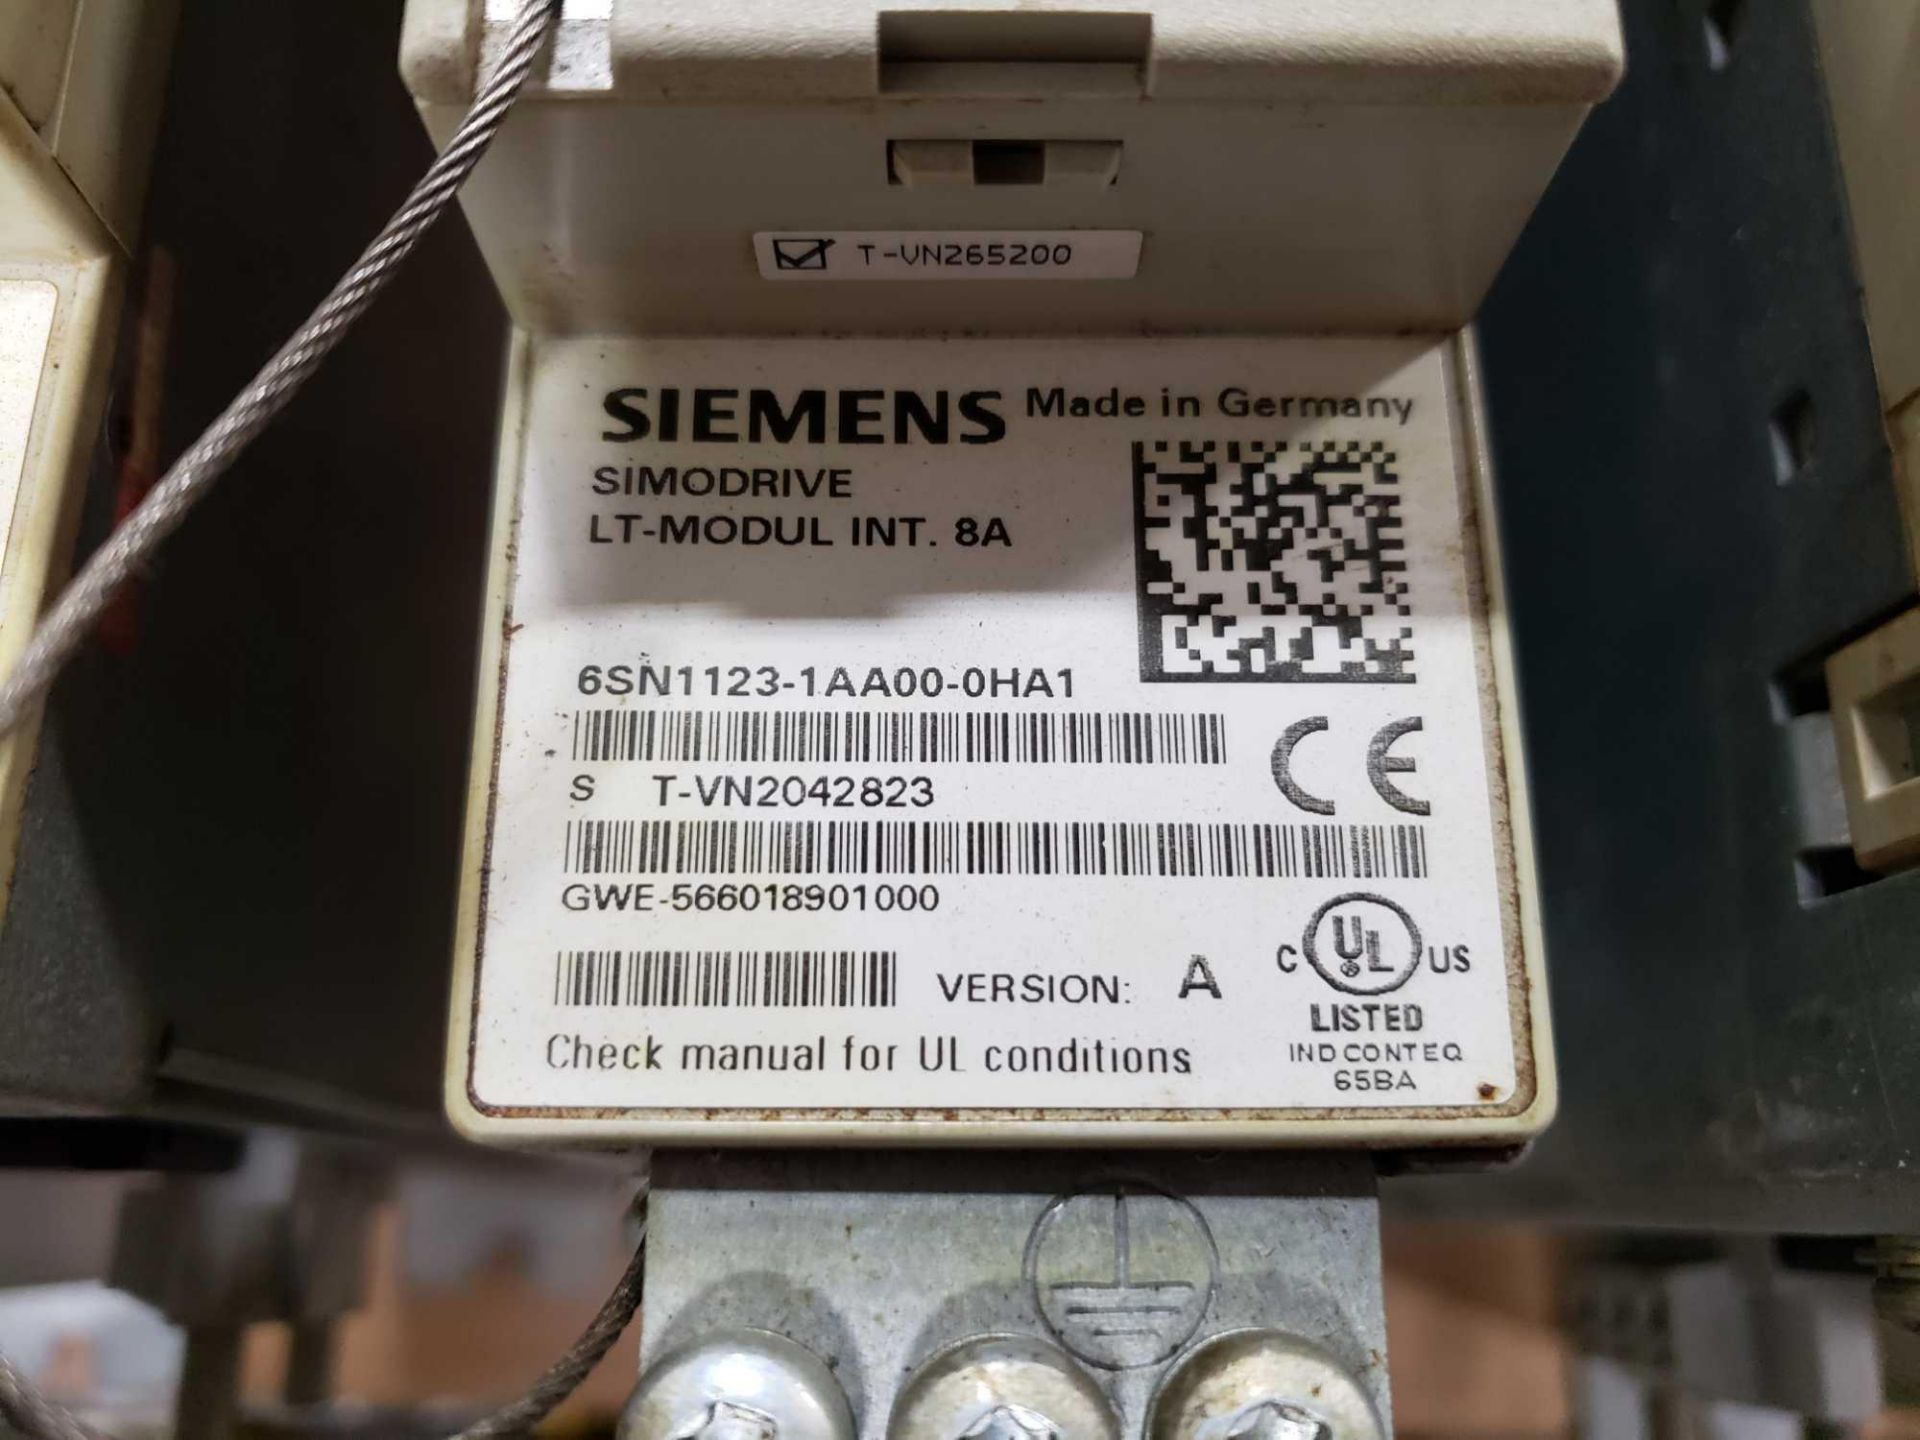 Siemens Simodrive LT-Modul Int. model 6SN1123-1AA00-0HA1. - Image 2 of 2